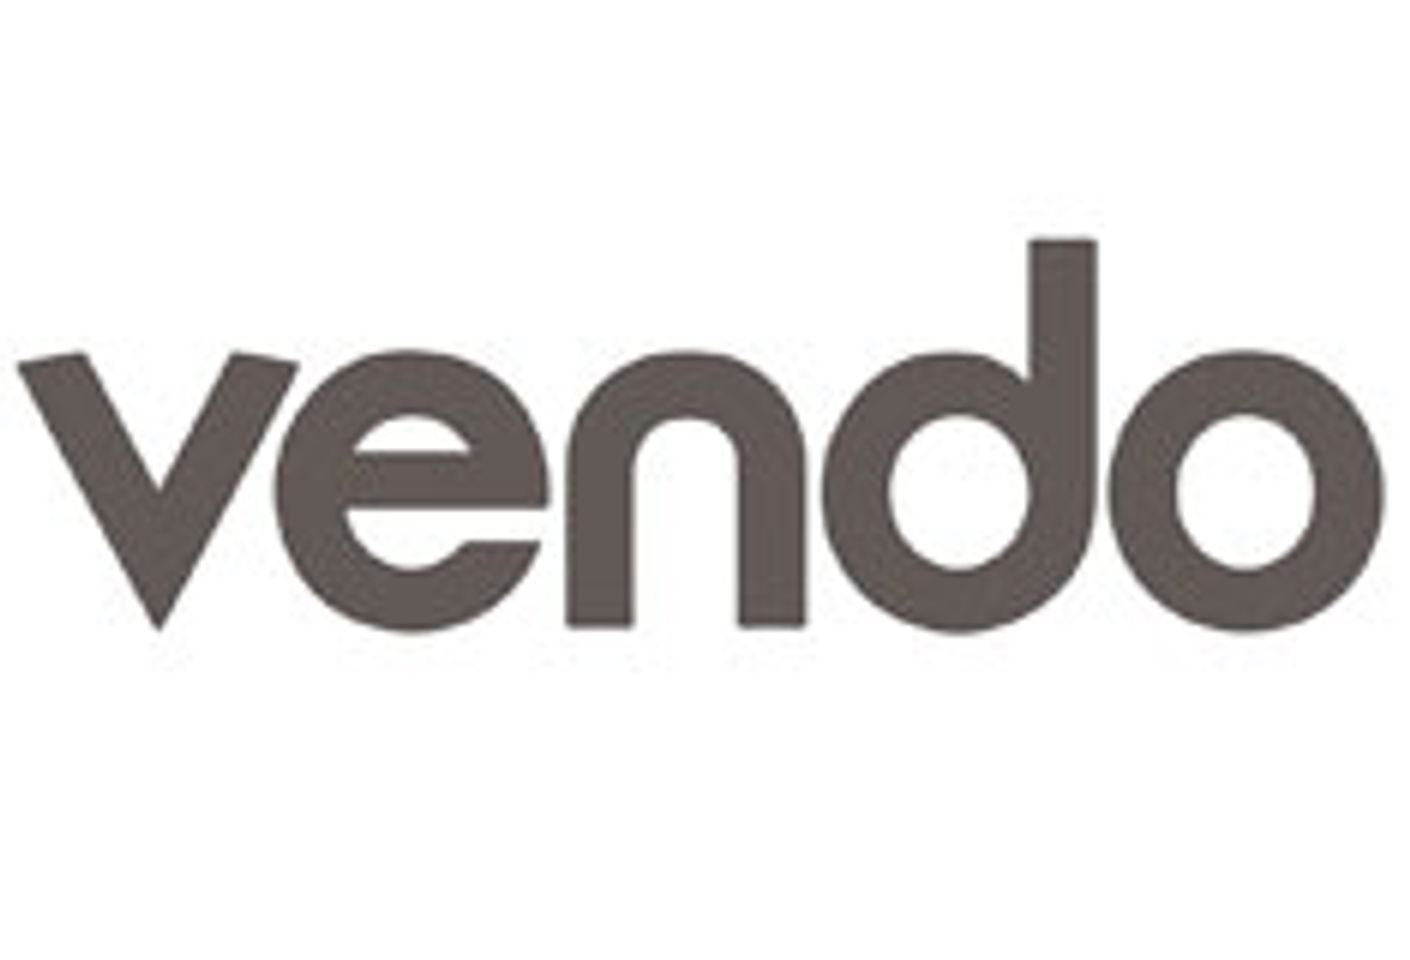 YNOT’s Jay Kopita Named Winner of Vendo Promo Drawing